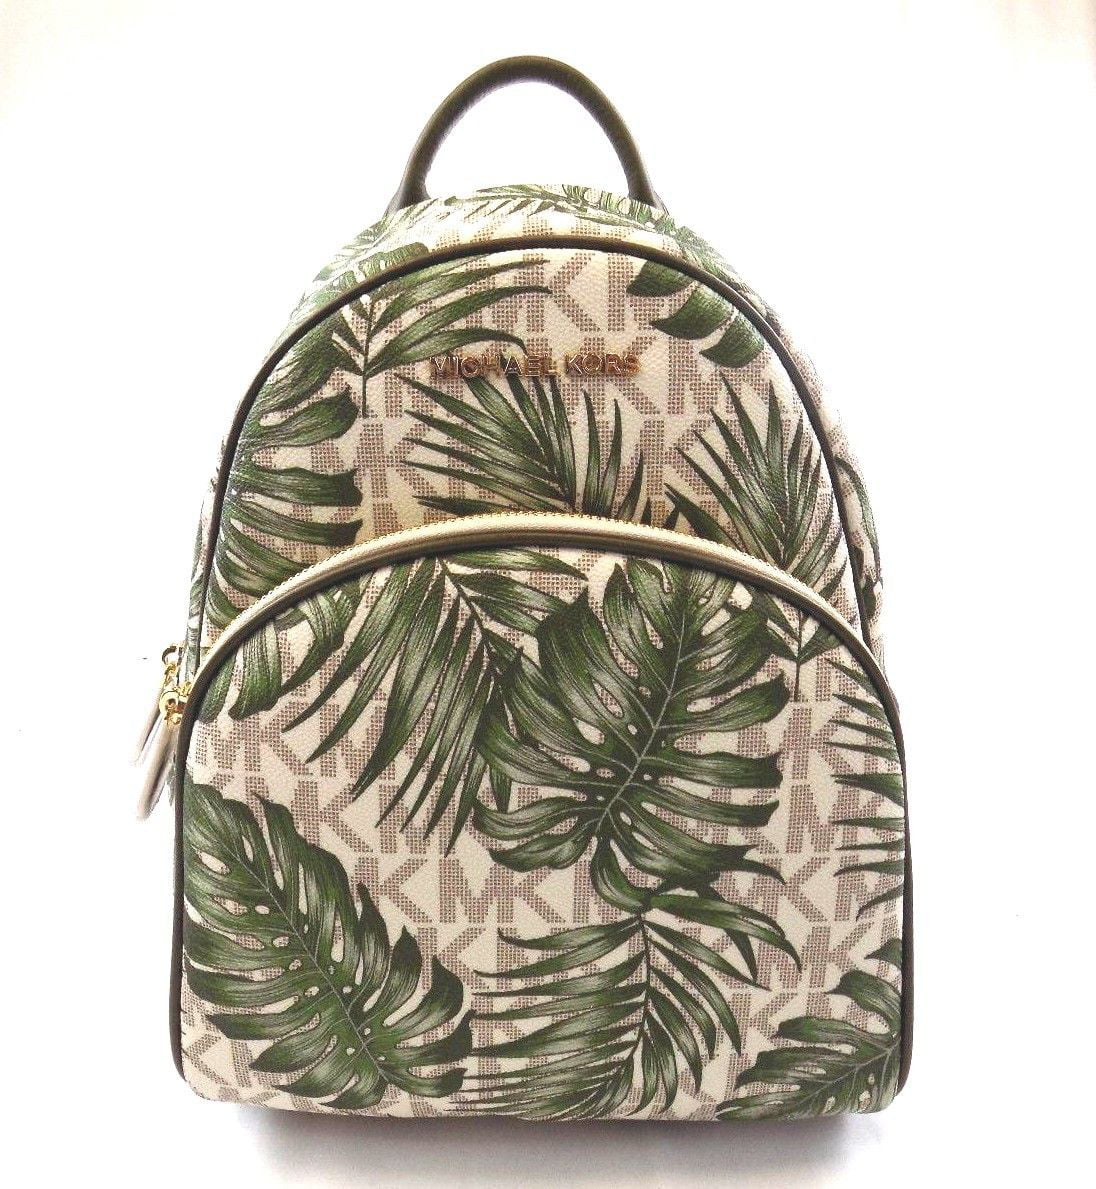 michael kors palm tree backpack